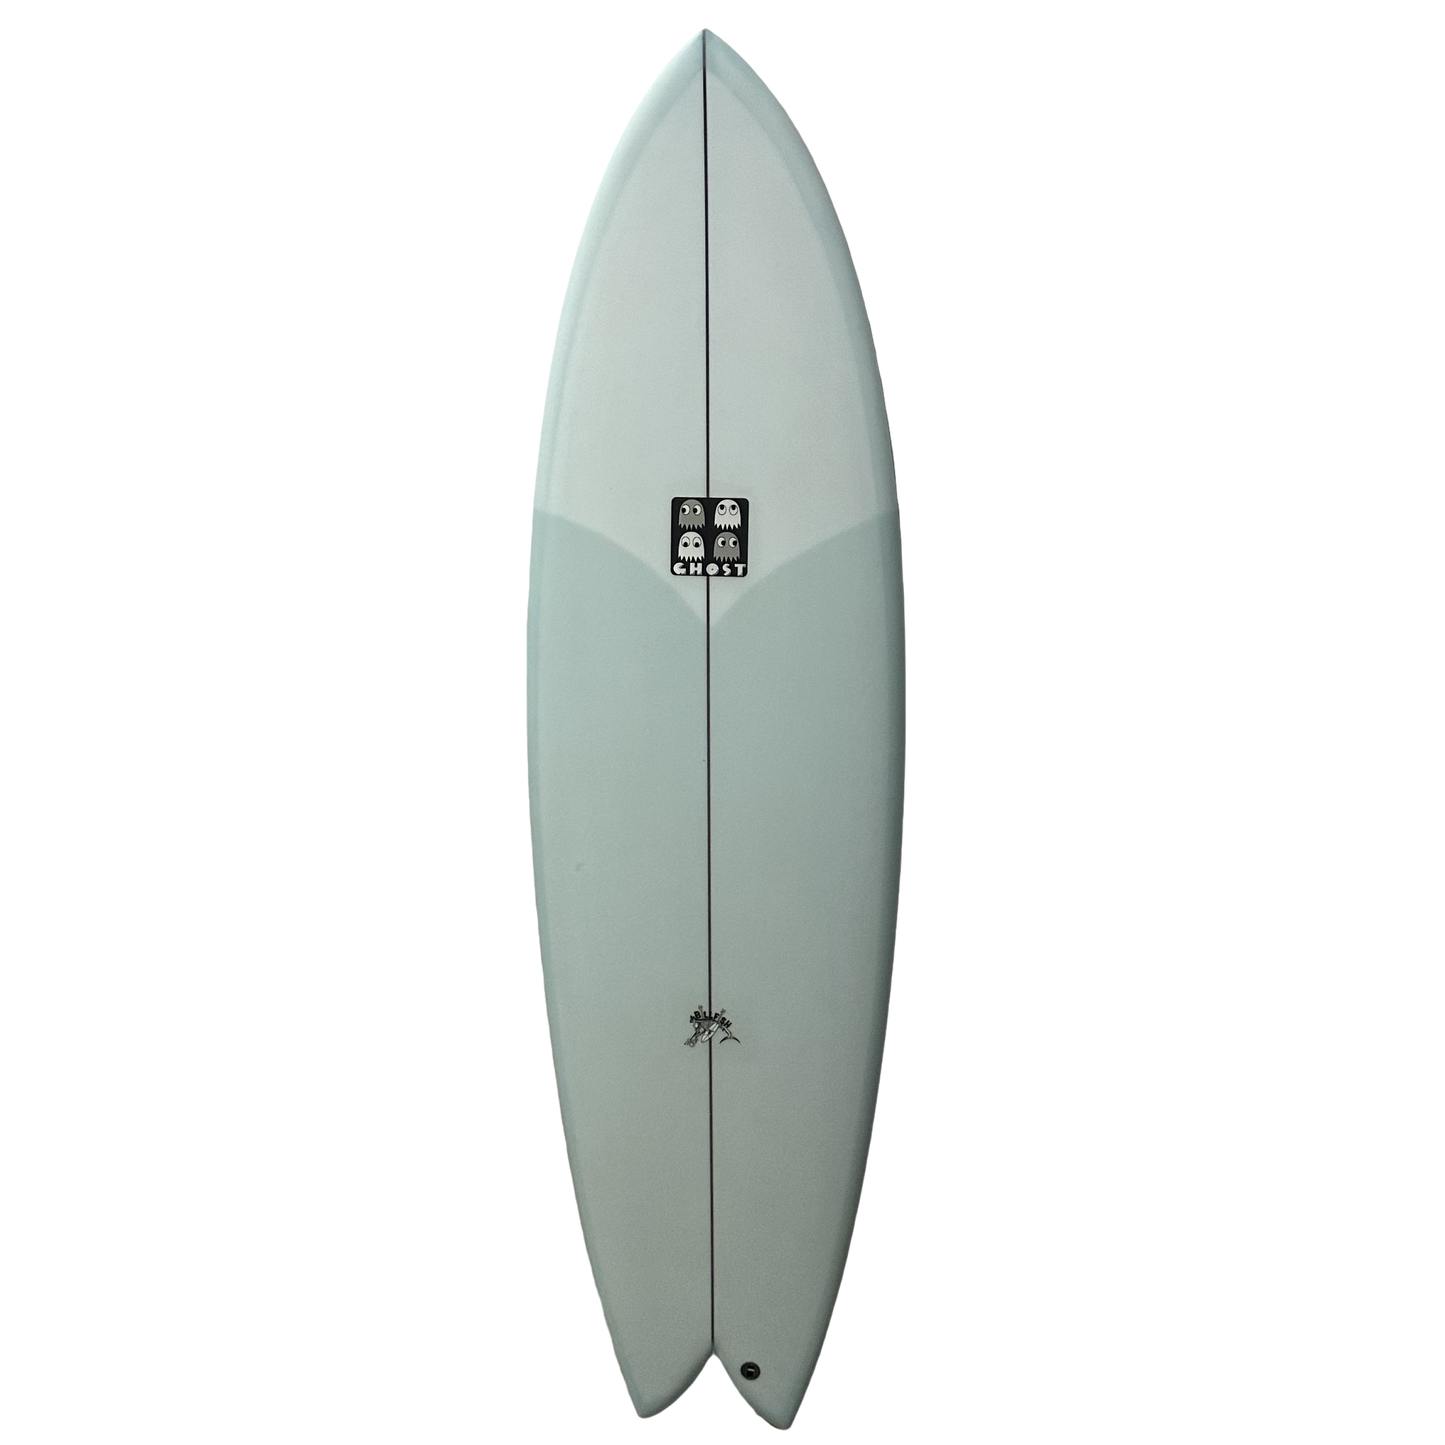 Ghost Shapes Billfish 6'2" Surfboard